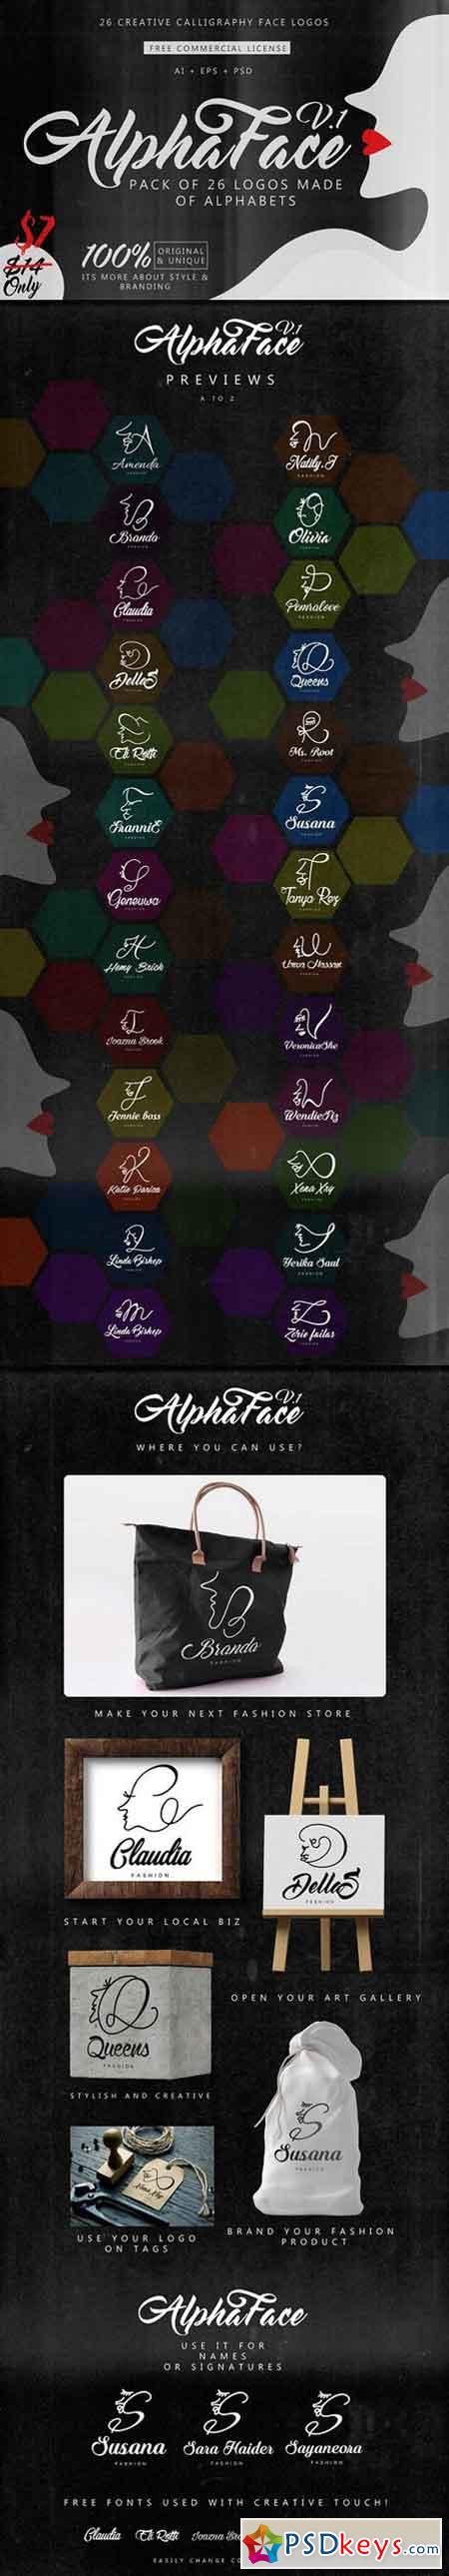 26 Logos for Her - AlphaFace 1279827